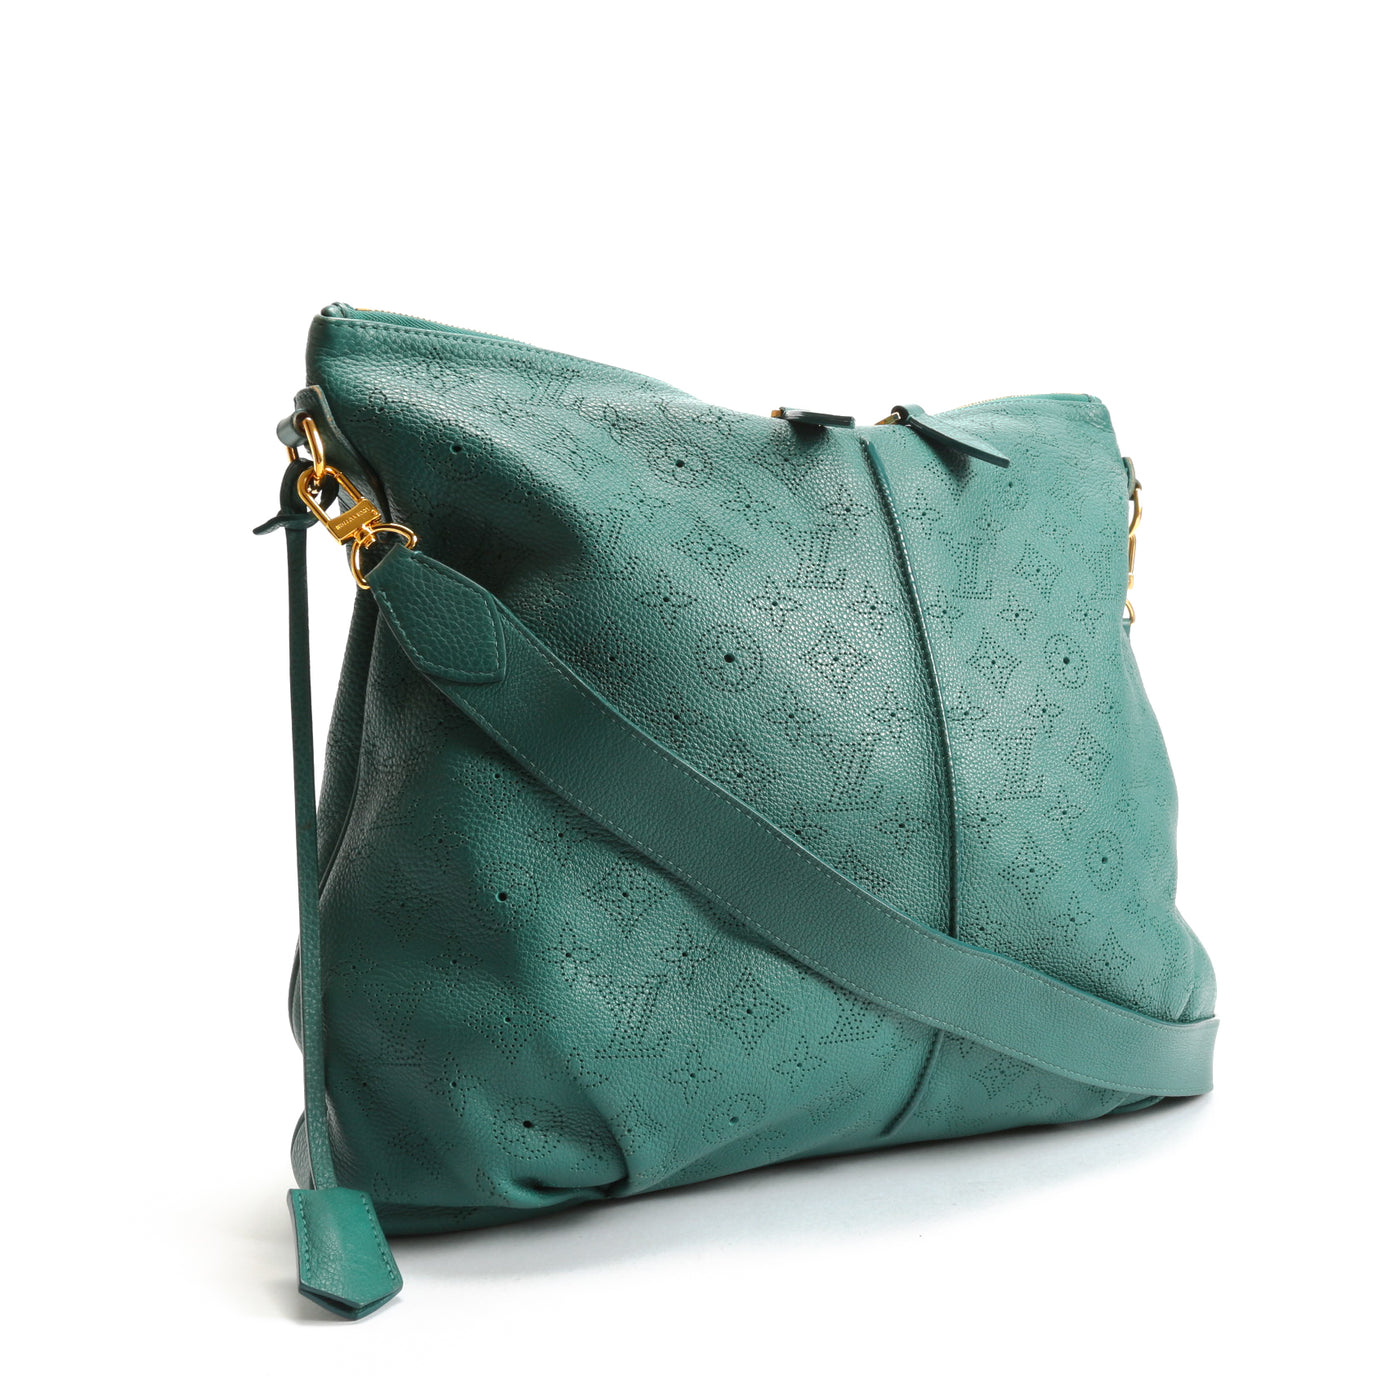 Authentic Louis Vuitton Mahina Leather Selene MM Shoulder Bag